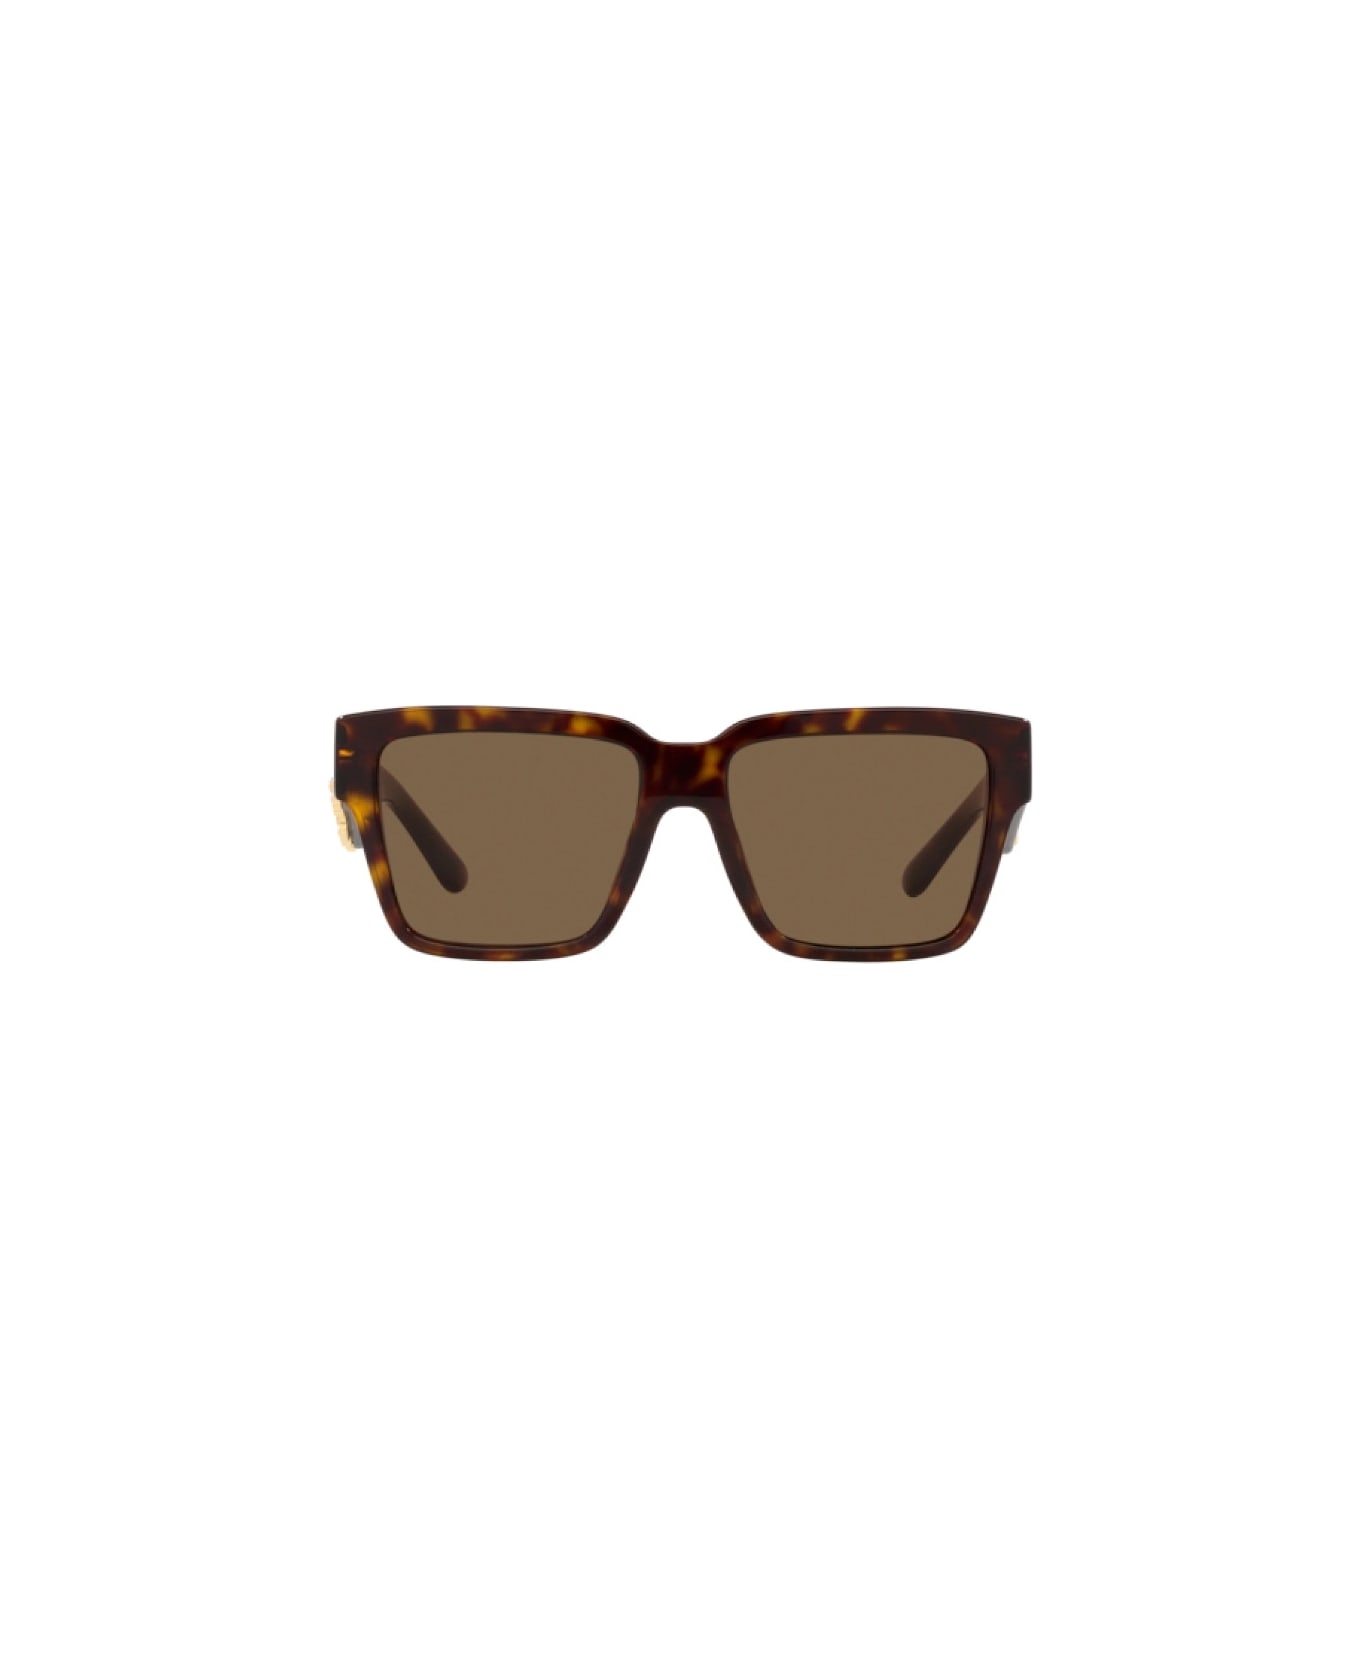 Dolce & Gabbana Eyewear DG4436 502/73 Sunglasses - Tartarugato